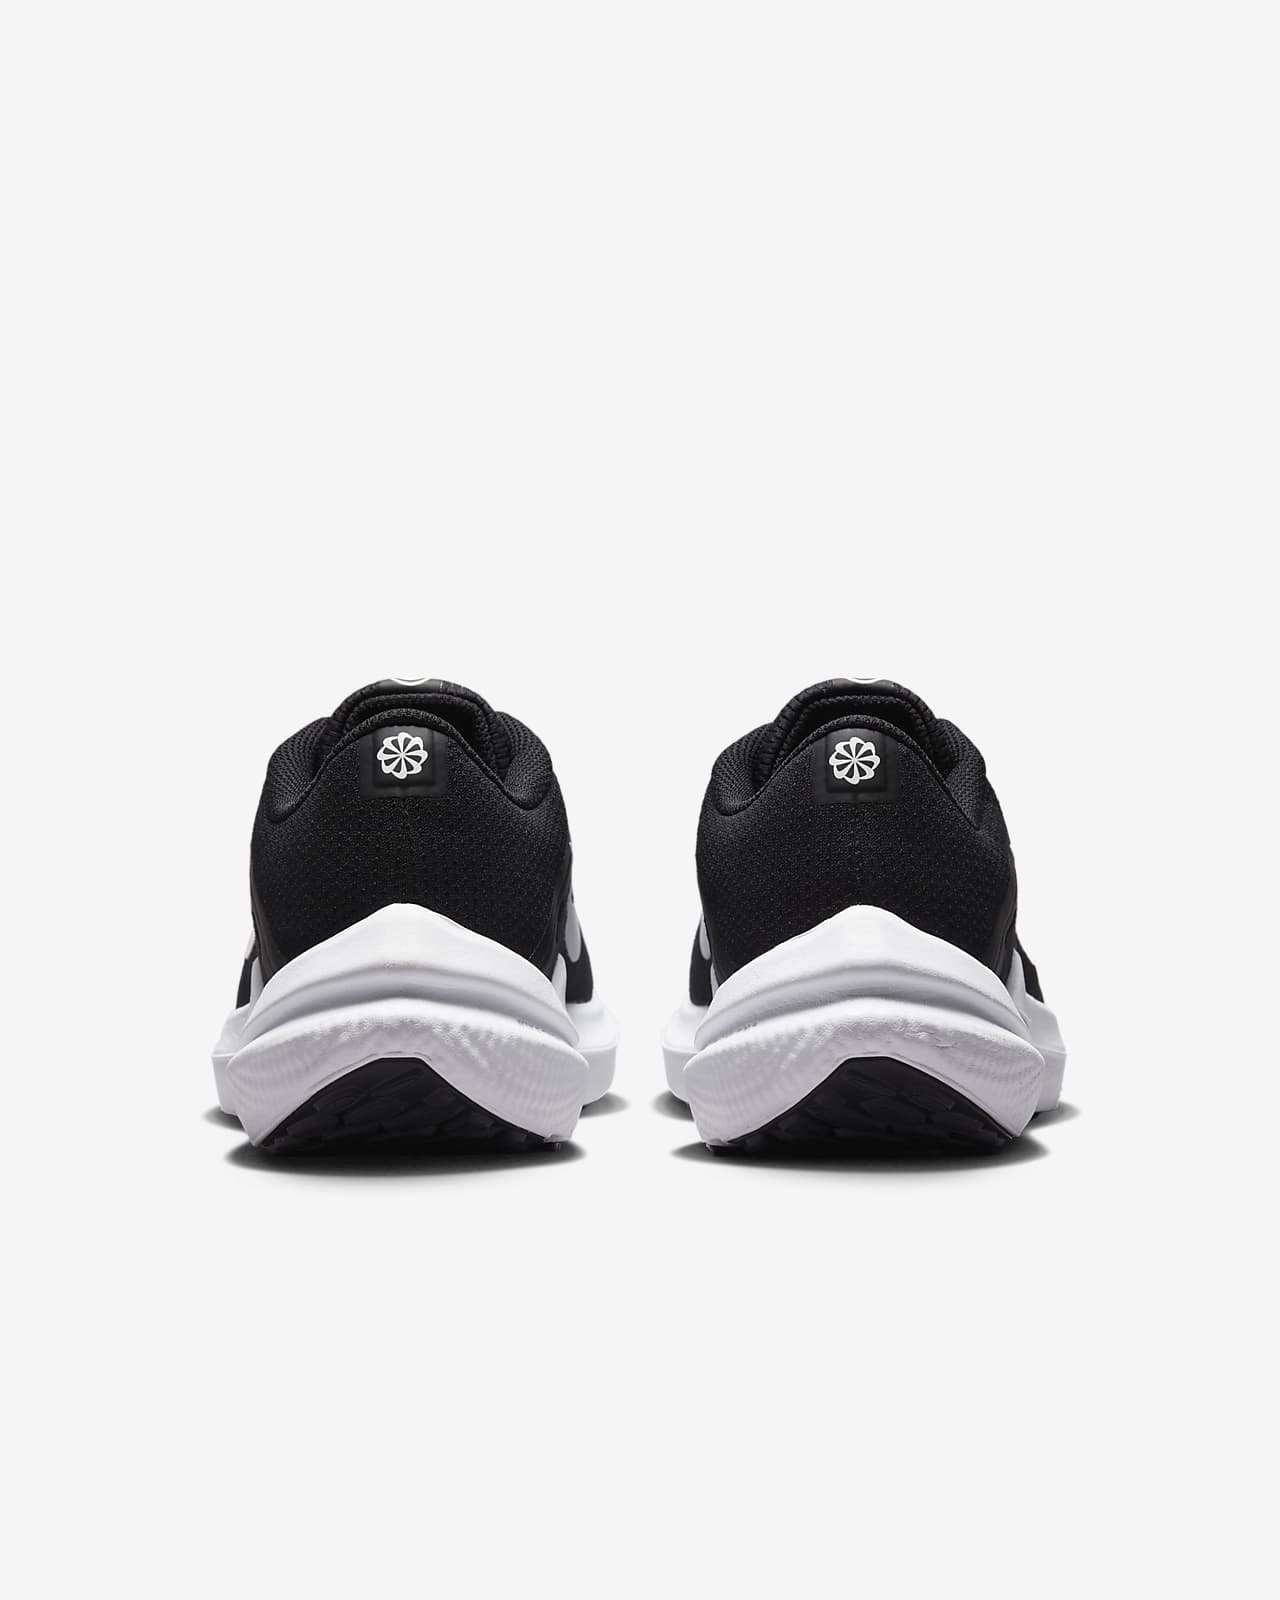 Zapatillas de running de mujer Air Winflo 10 Nike